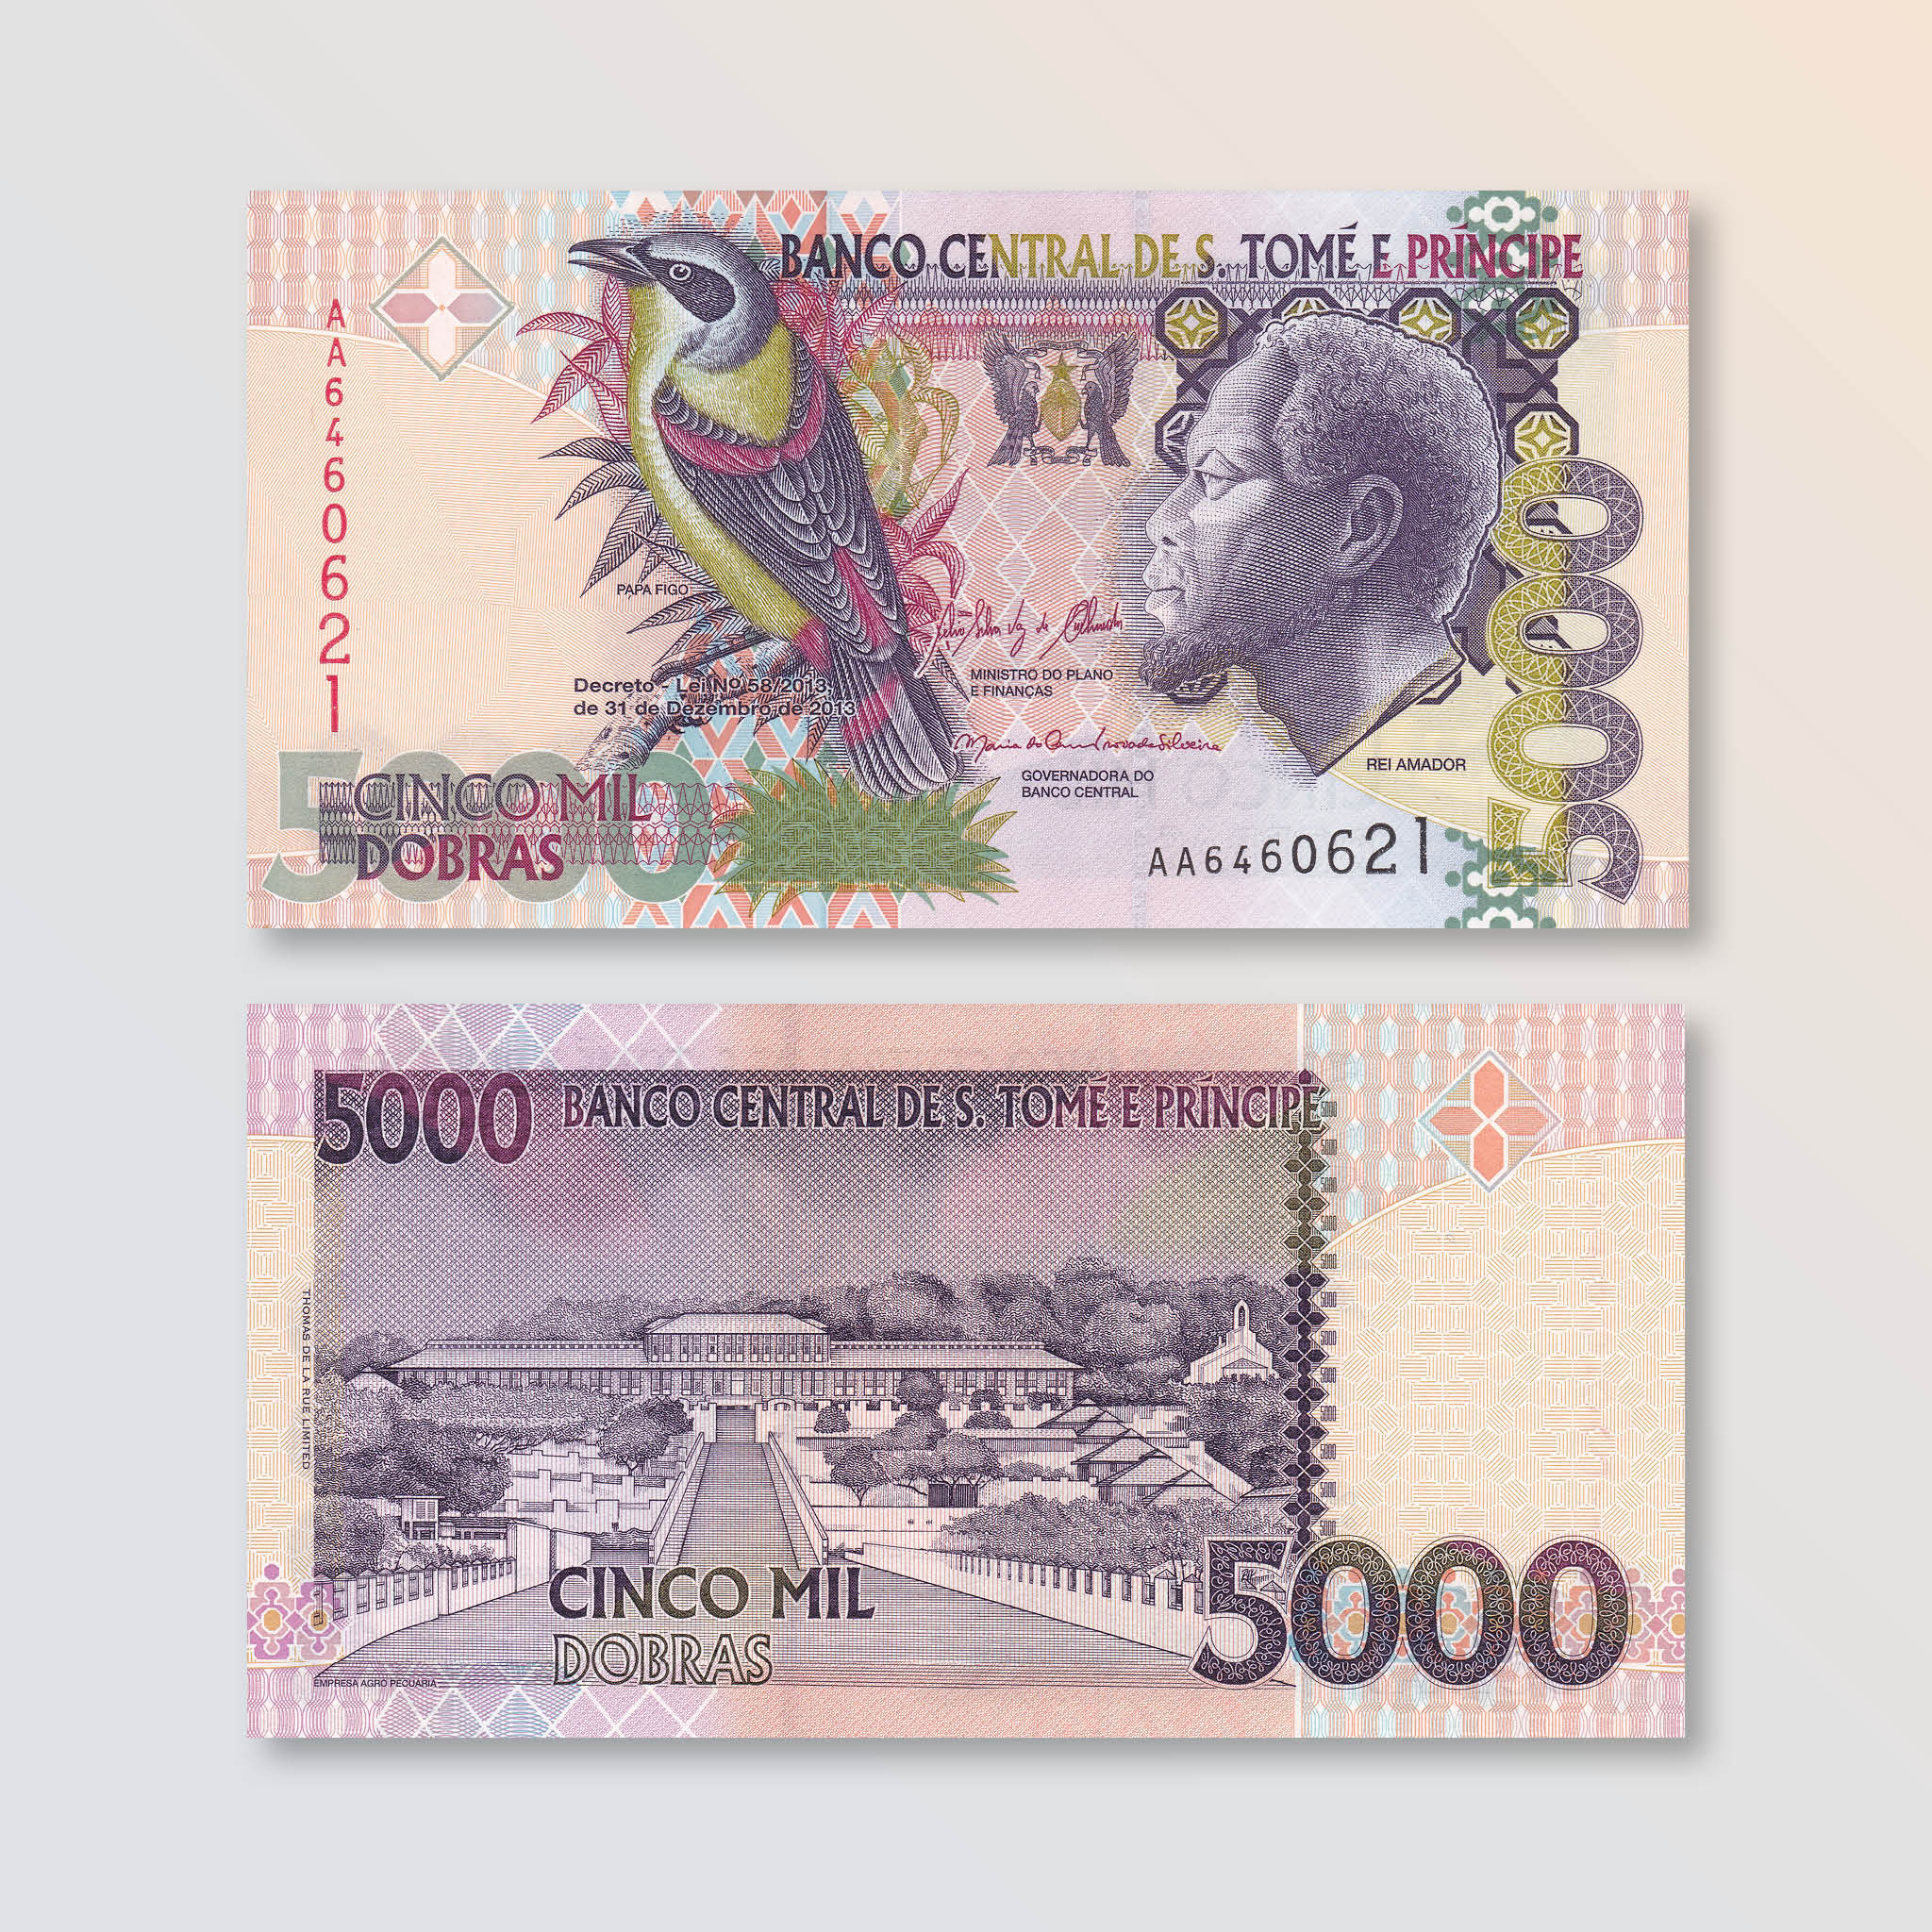 São Tomé & Príncipe 5000 Dobras, 2013, B303d, P65d, UNC - Robert's World Money - World Banknotes